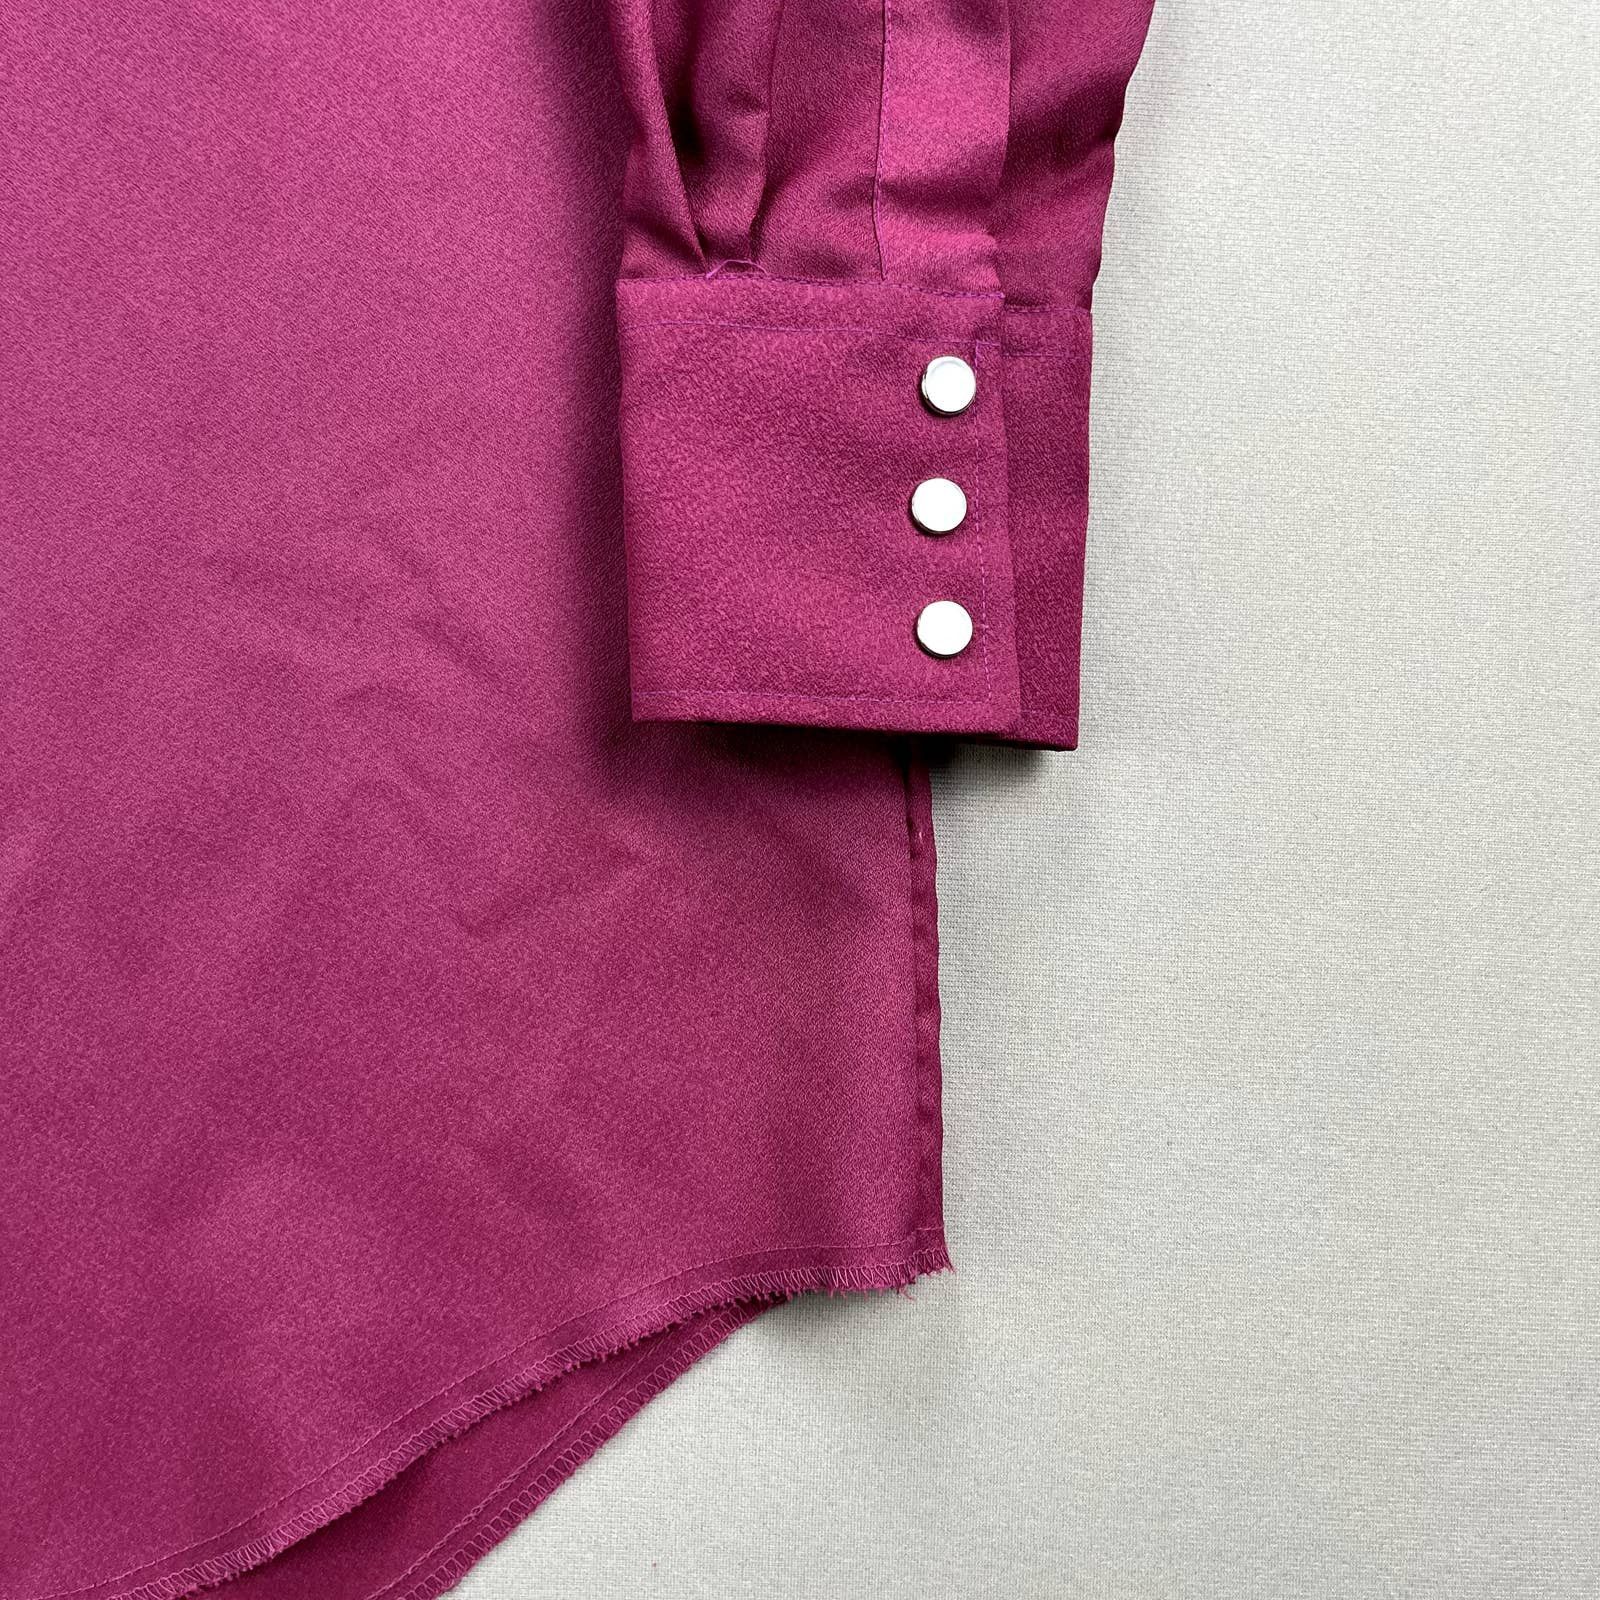 Vintage Vintage Champion Westerns Shirt Medium 15-33 Pink Pearl Snap Size US M / EU 48-50 / 2 - 3 Thumbnail